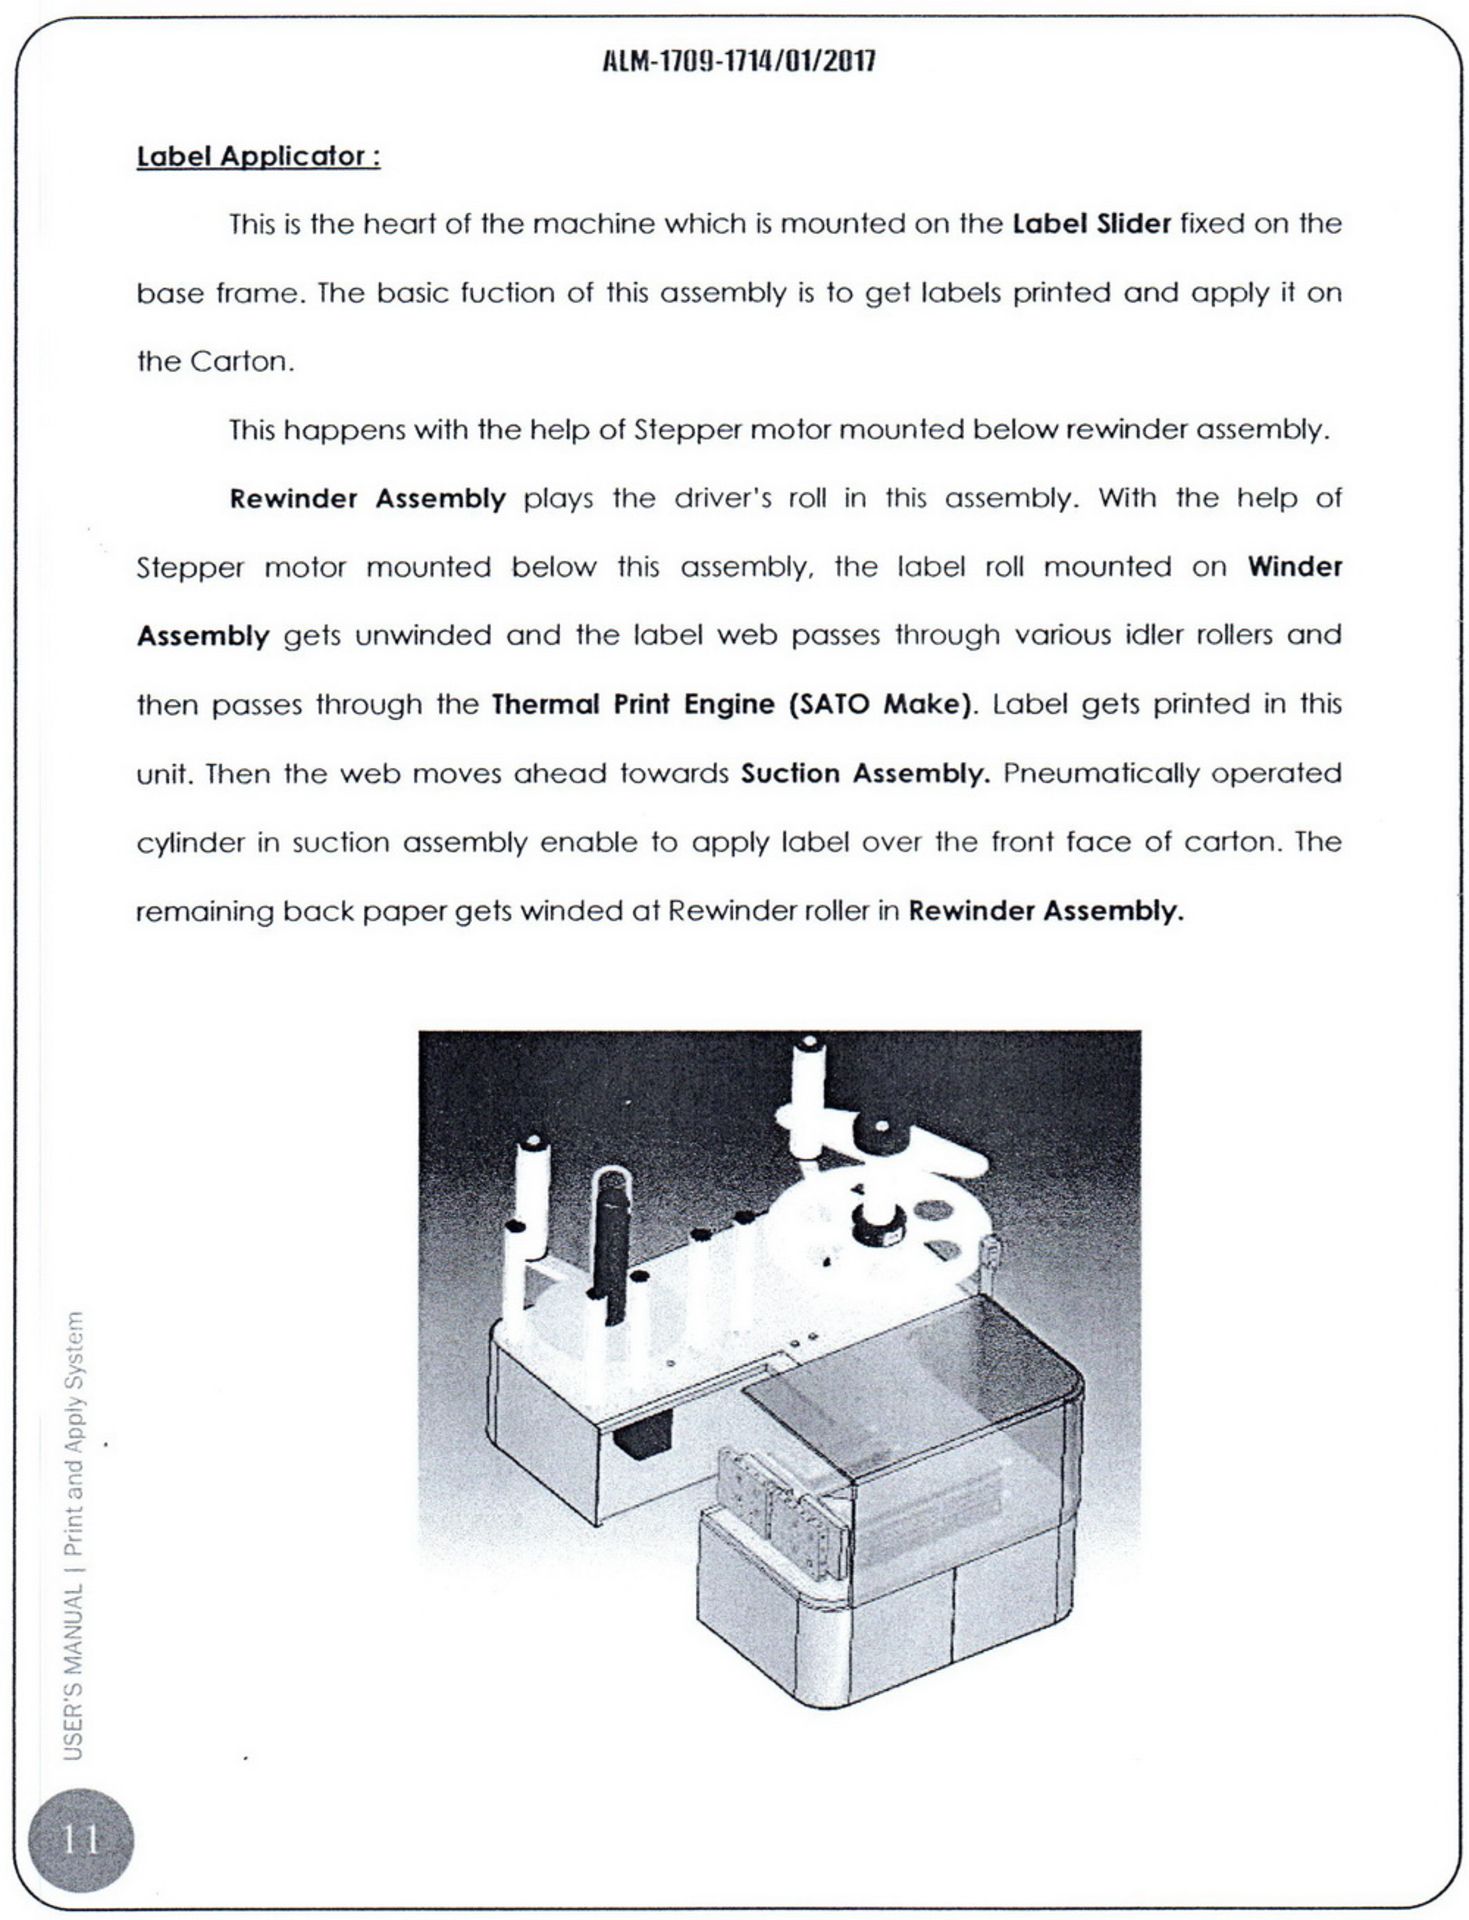 Unused Skanem Interlabels Print and Apply Labeler - Image 16 of 24